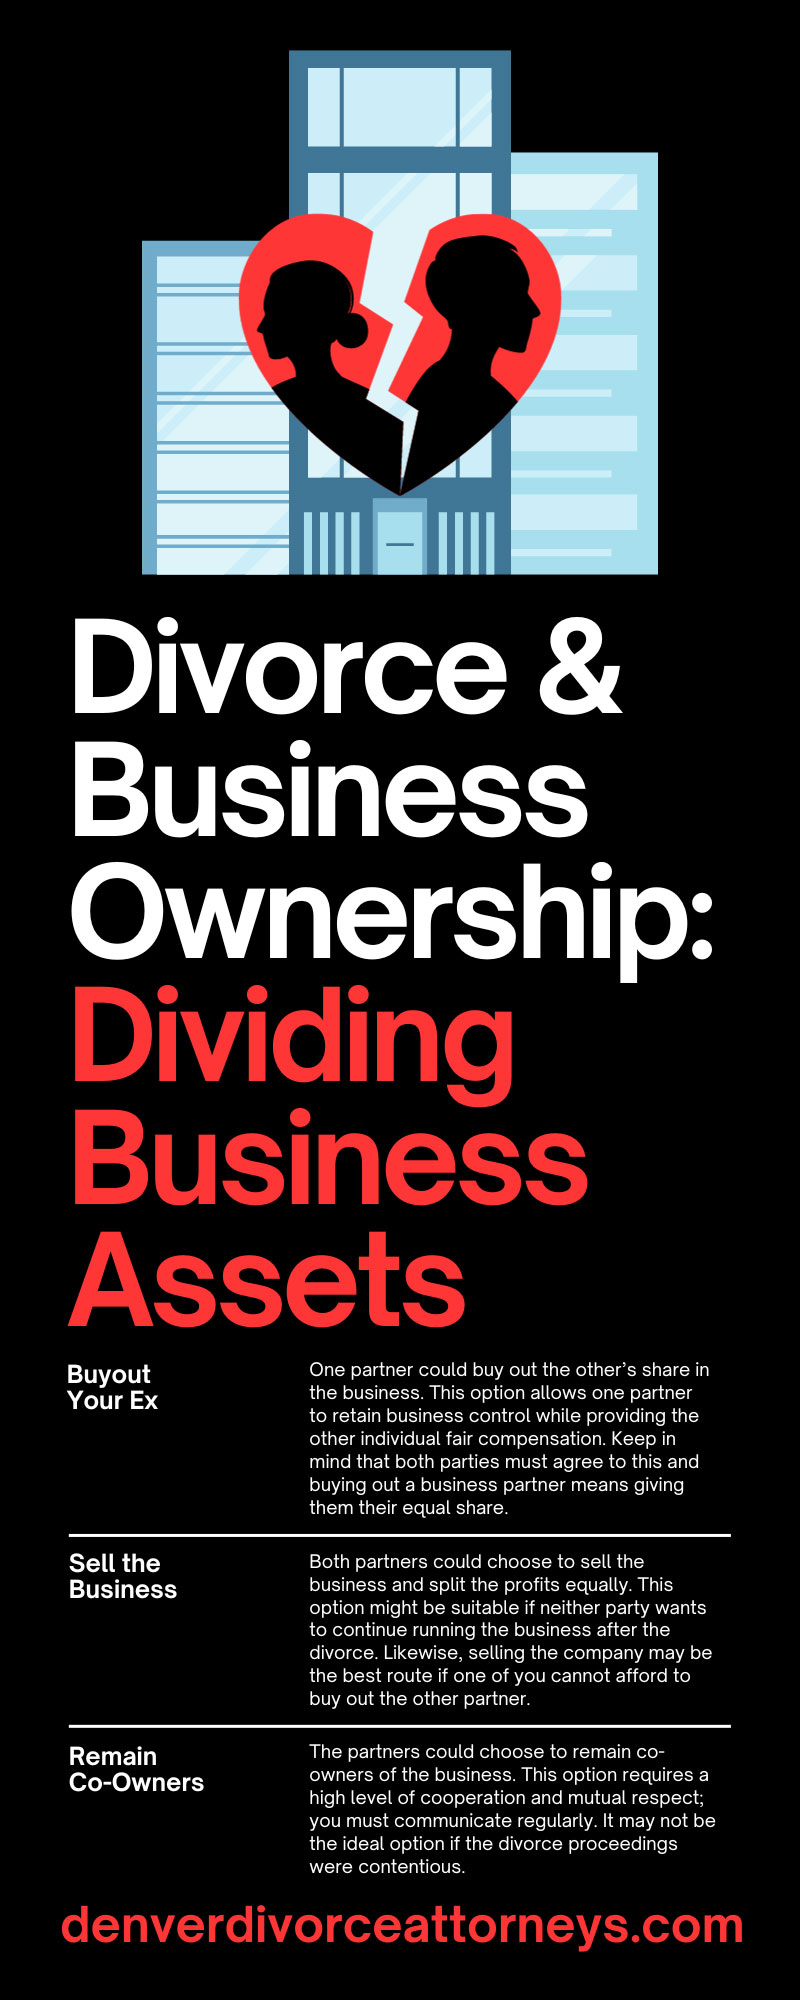 Divorce & Business Ownership: Dividing Business Assets